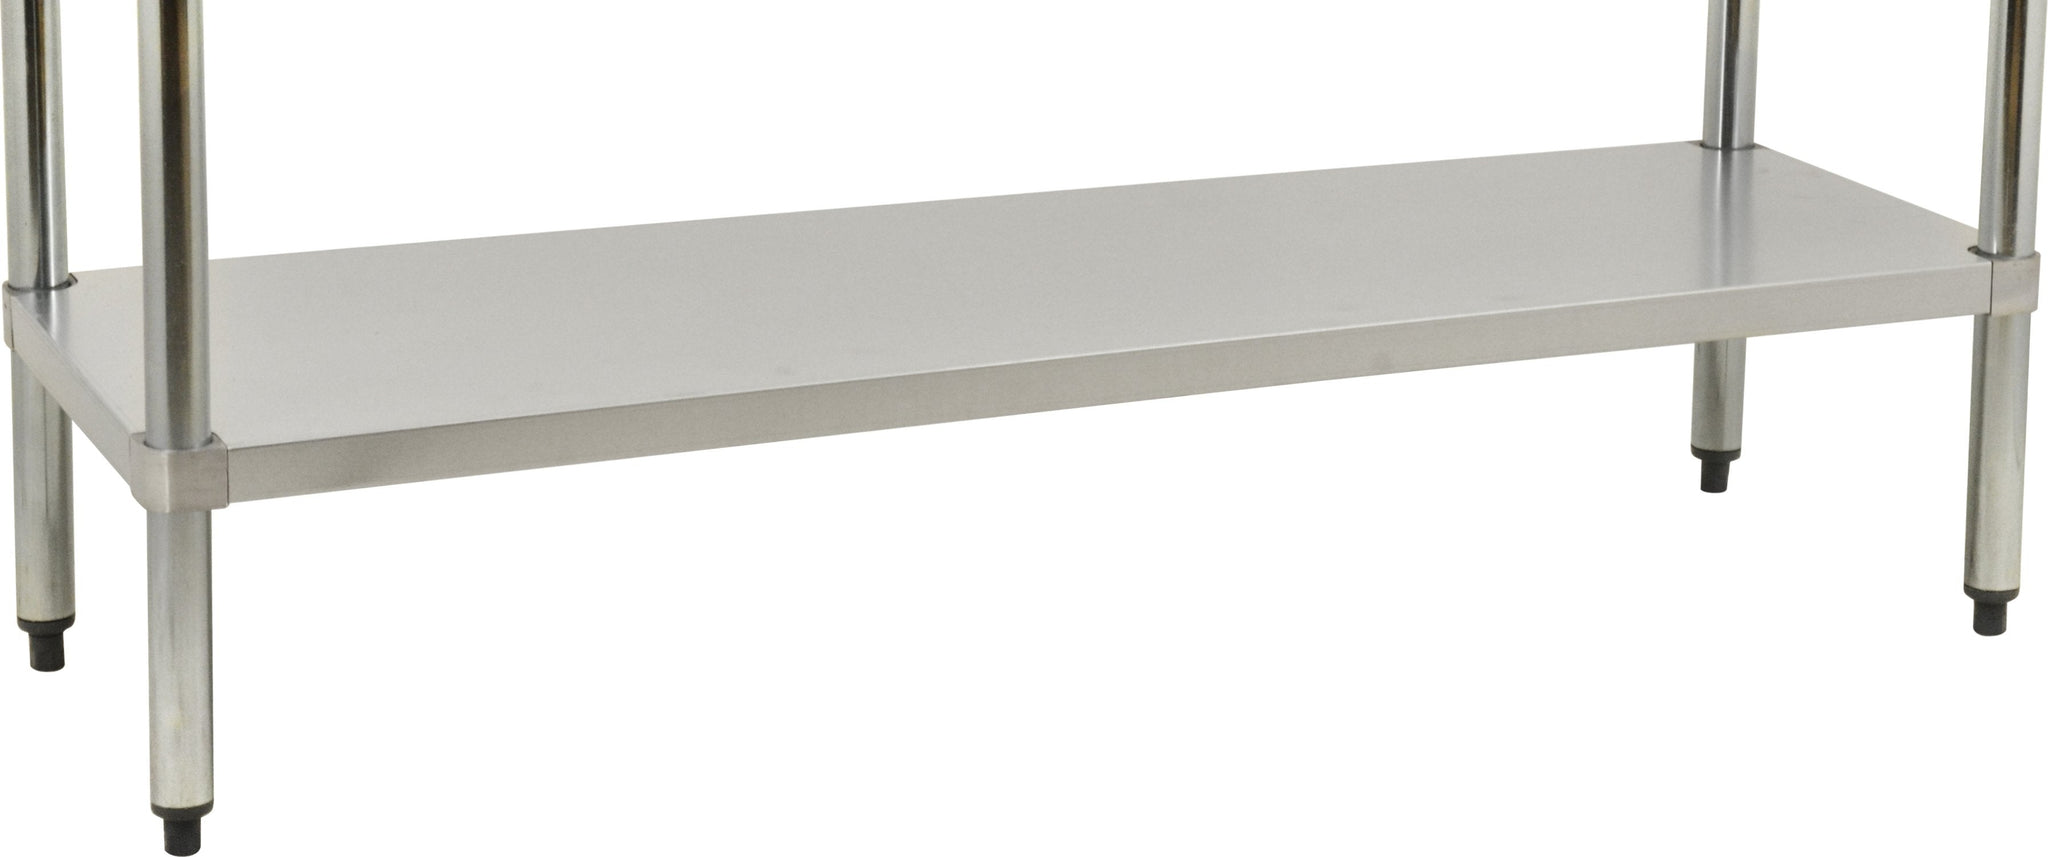 Omcan - 24” x 84” Stainless Steel Undershelf For Work Table - 21613